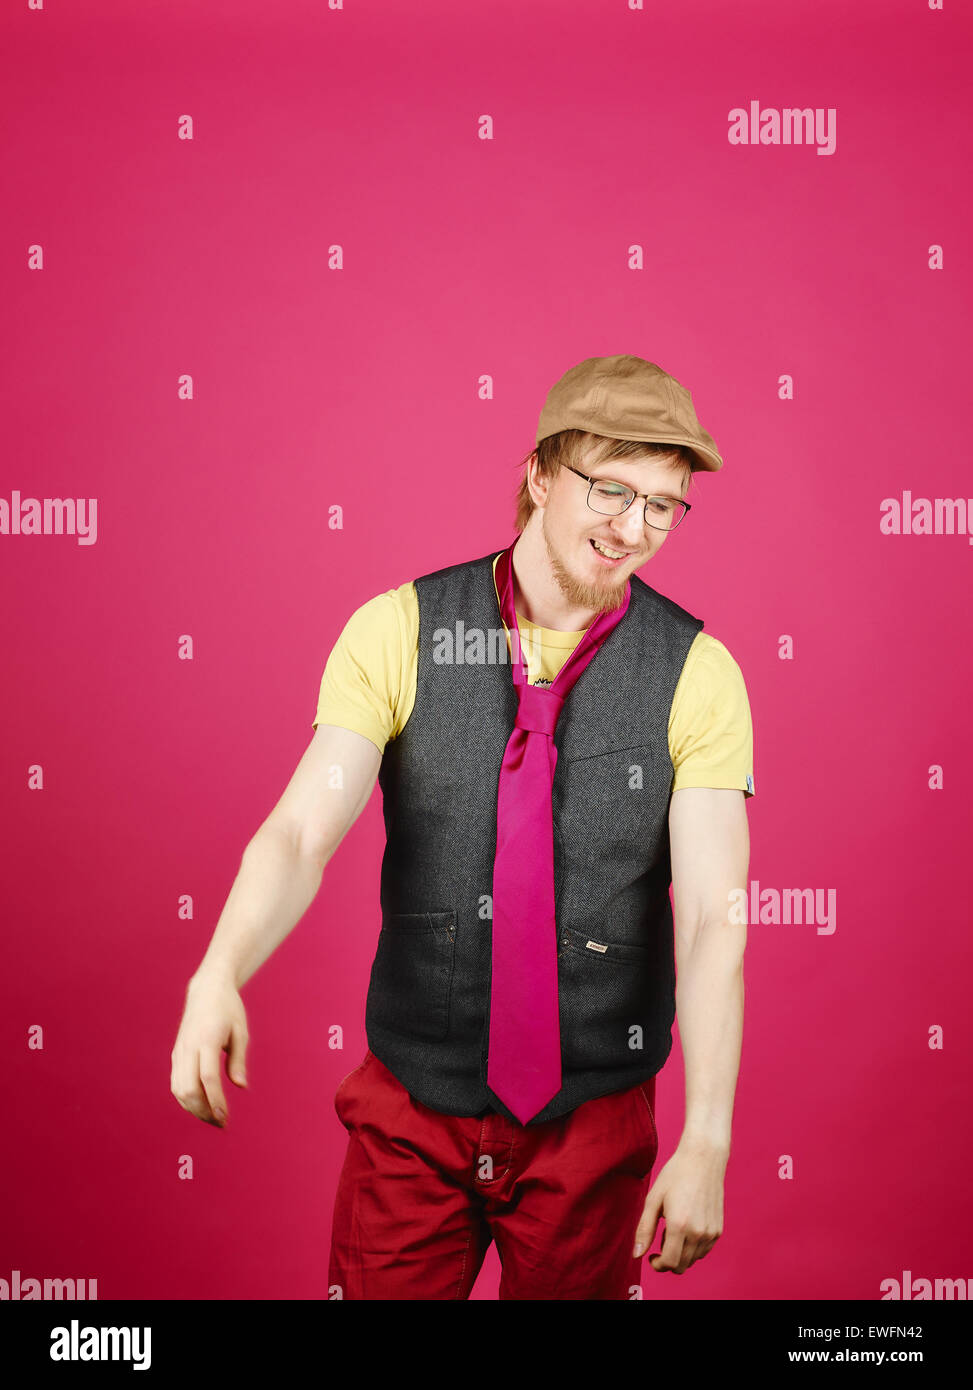 Hipster expressif portant une veste et cravate rose, fond rose et studio shot Banque D'Images